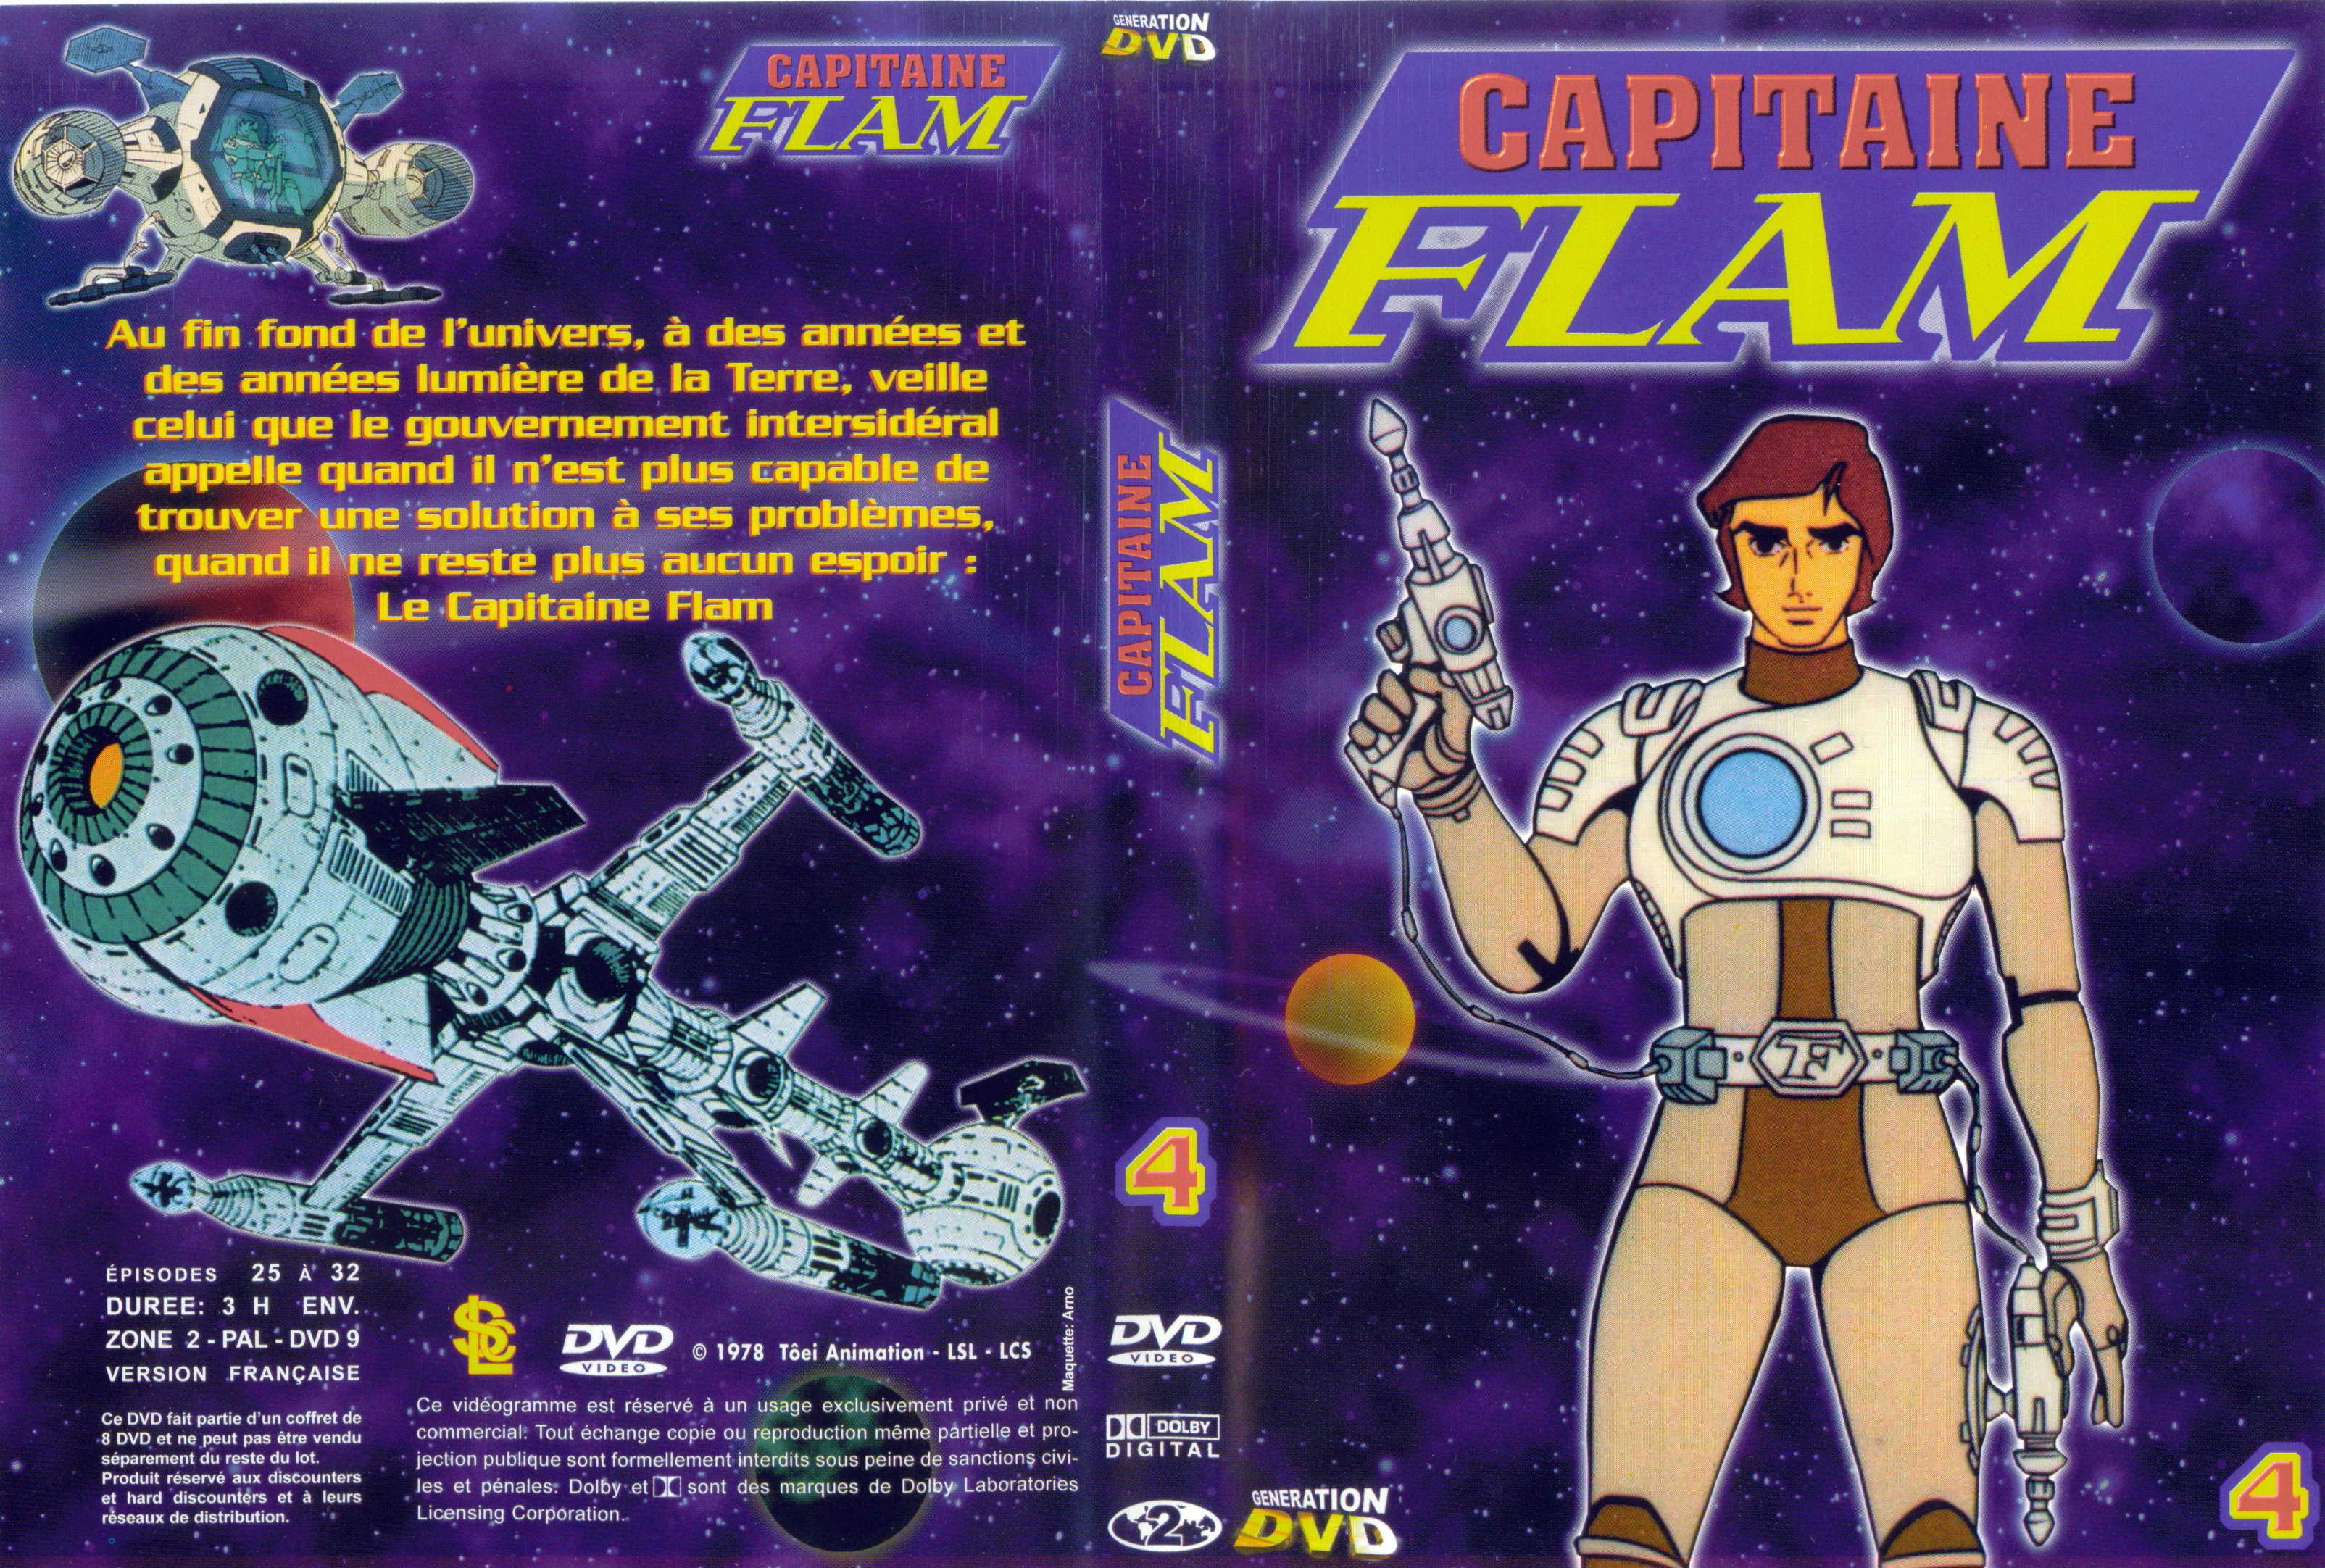 Jaquette DVD Capitaine Flam vol 4 (GENERATION DVD)